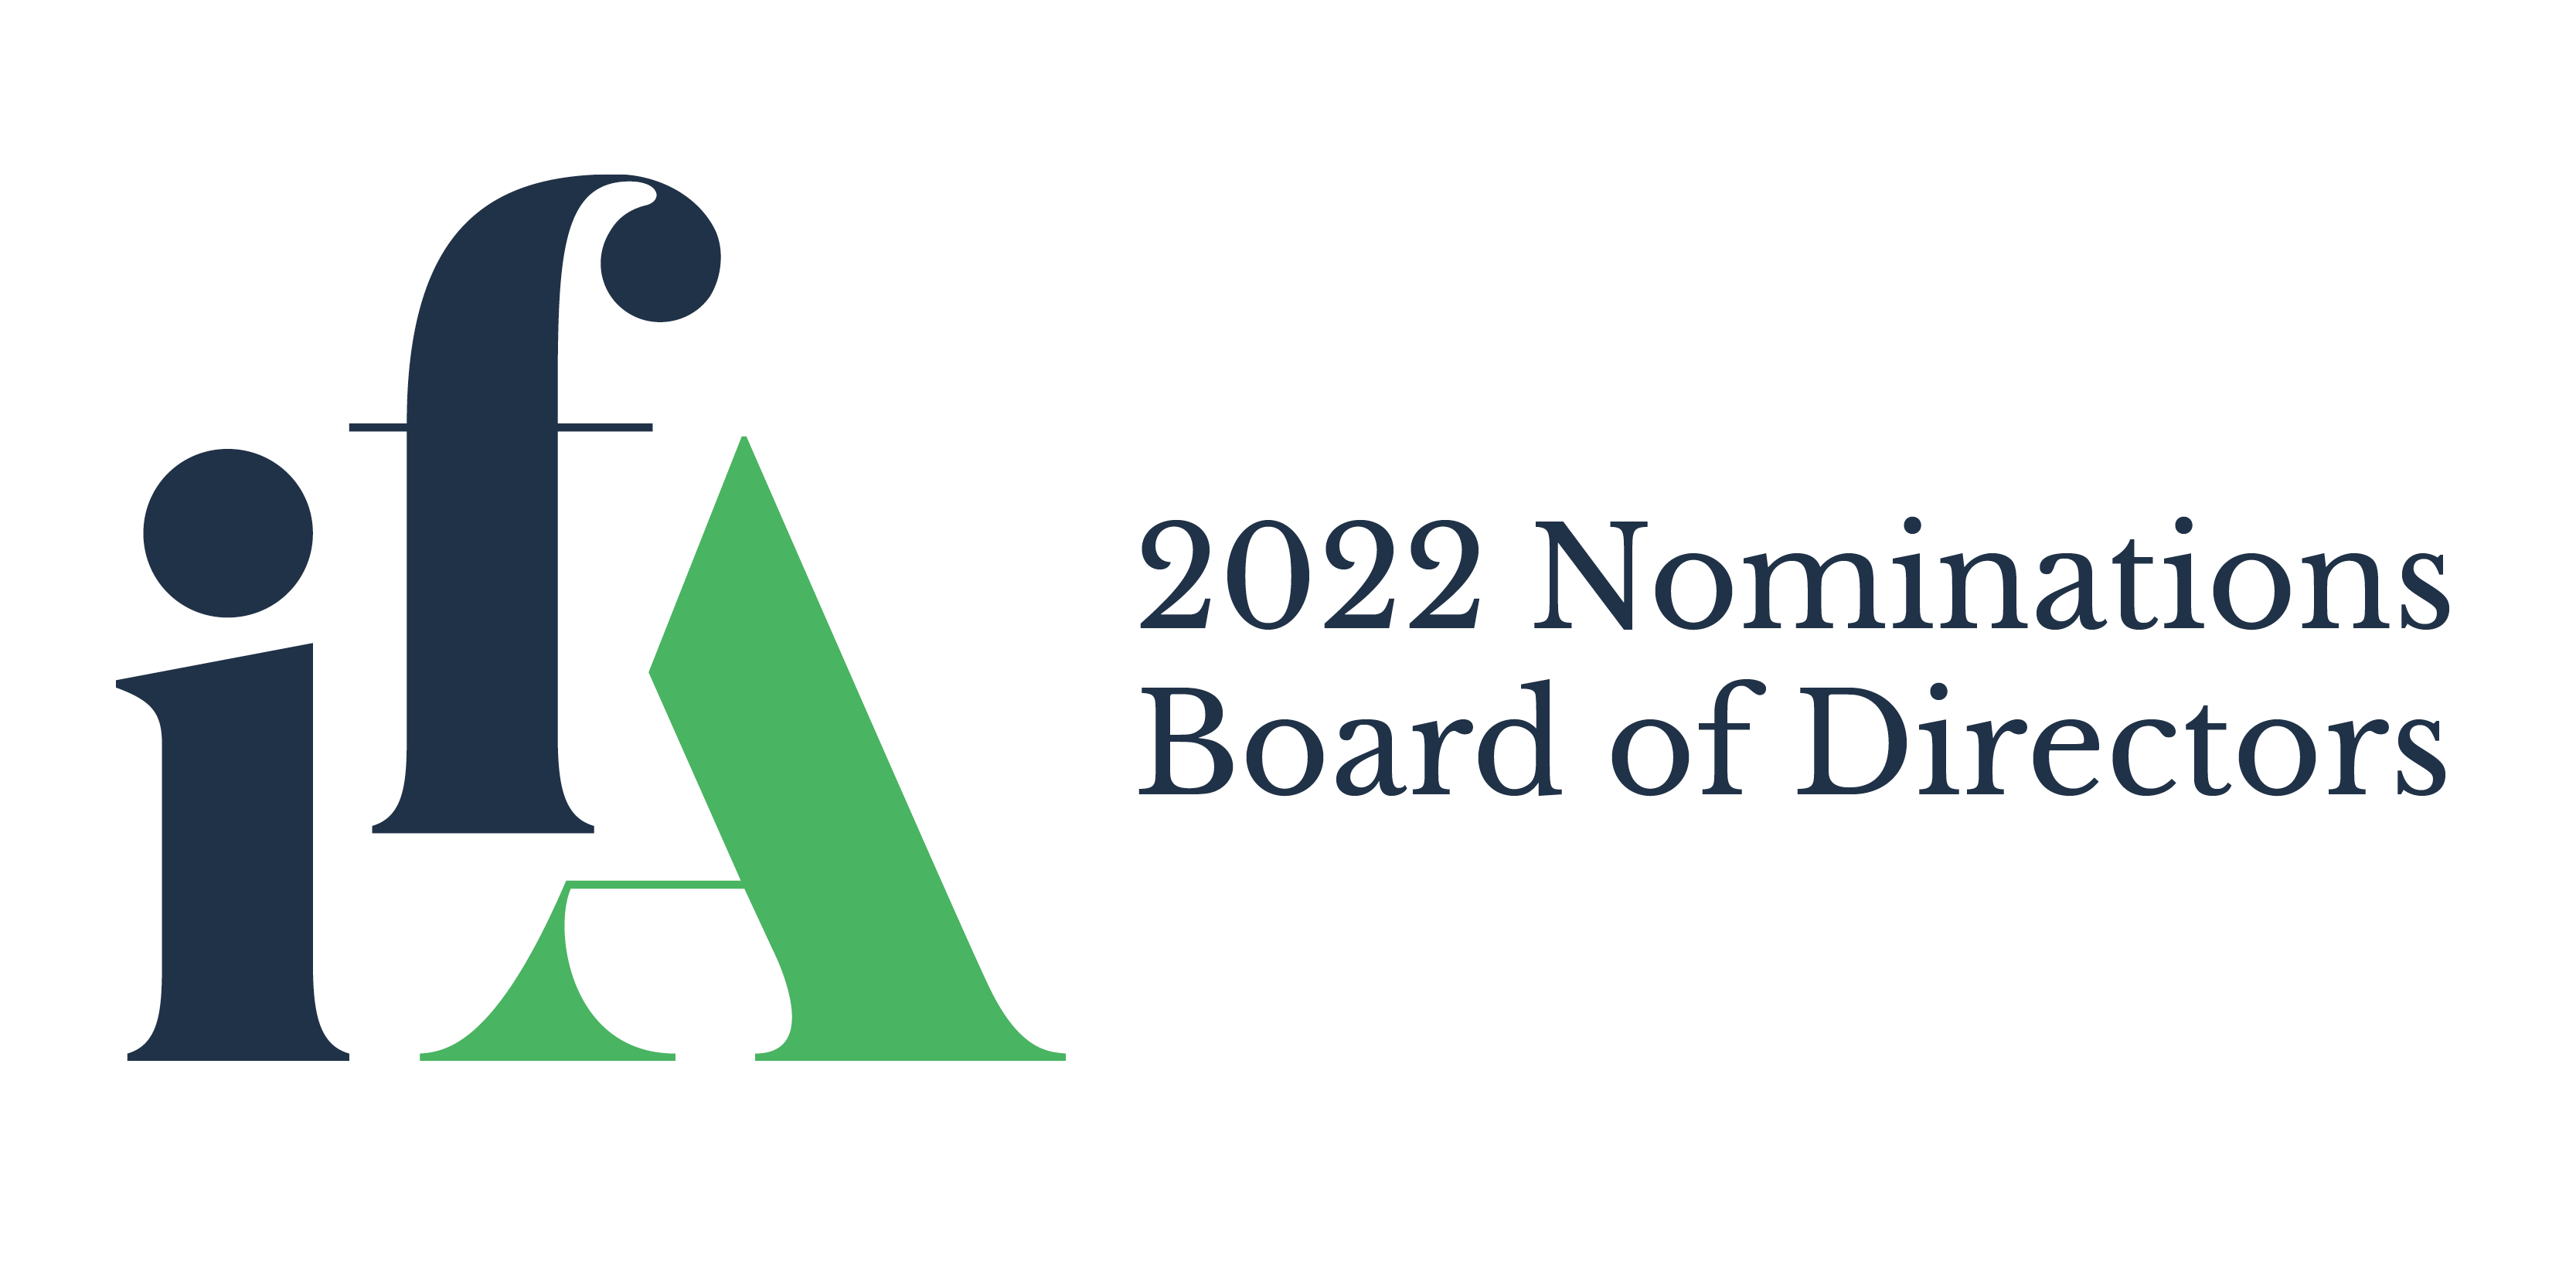 IFA 2022 Nominations Board of Directors